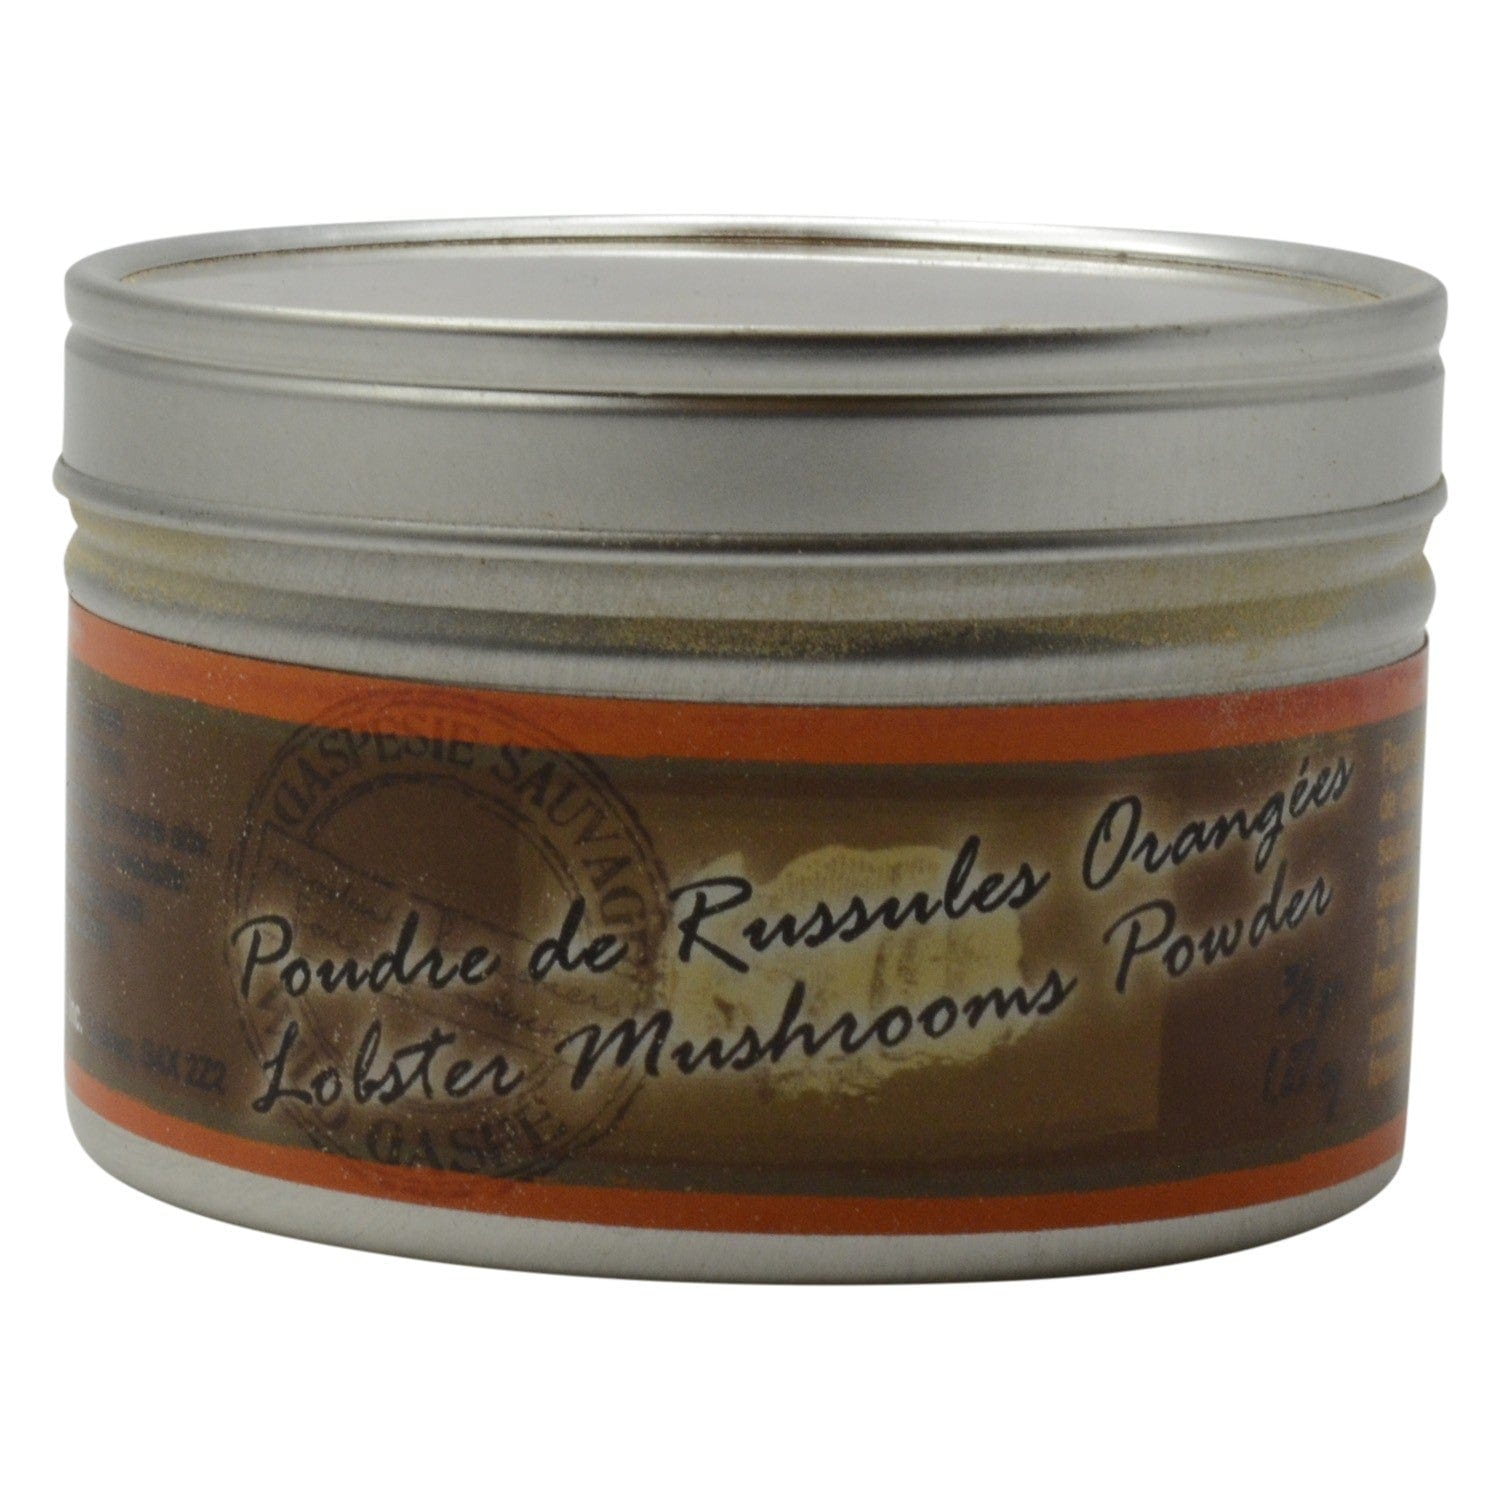 Orange russula powder